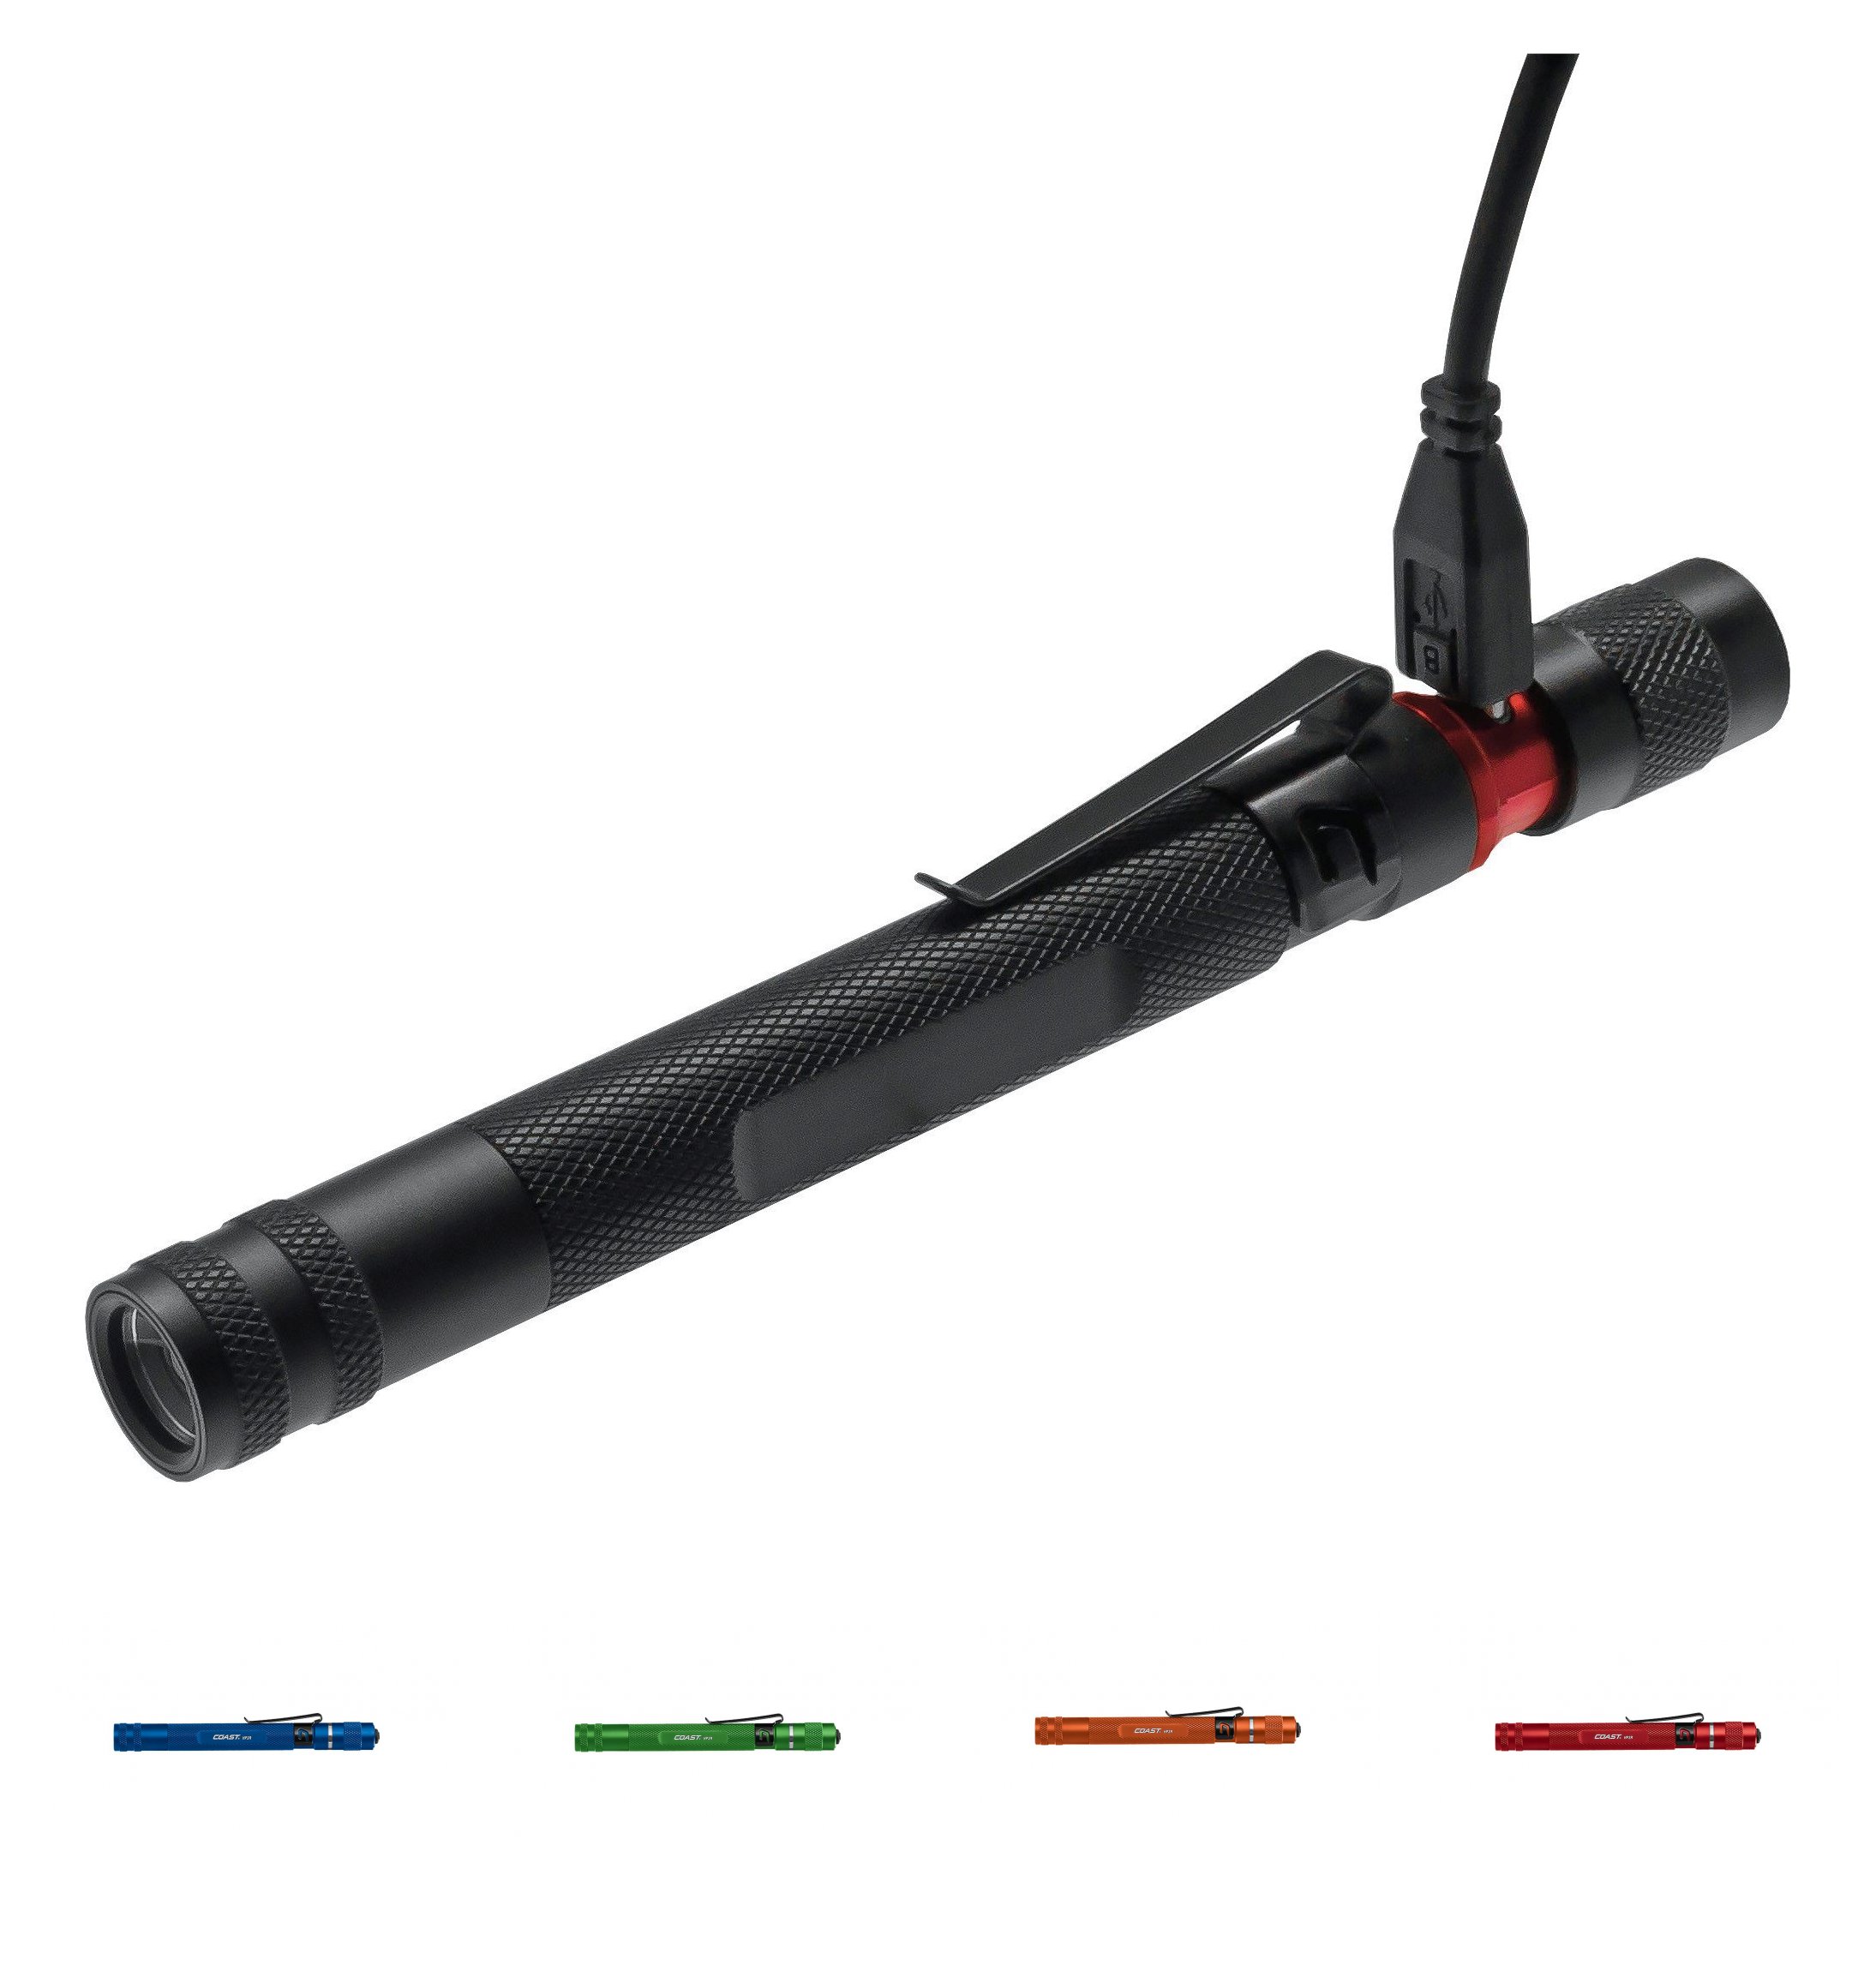 COAST HP3R 245 Lumen Rechargeable LED Penlight with Twist Focus 